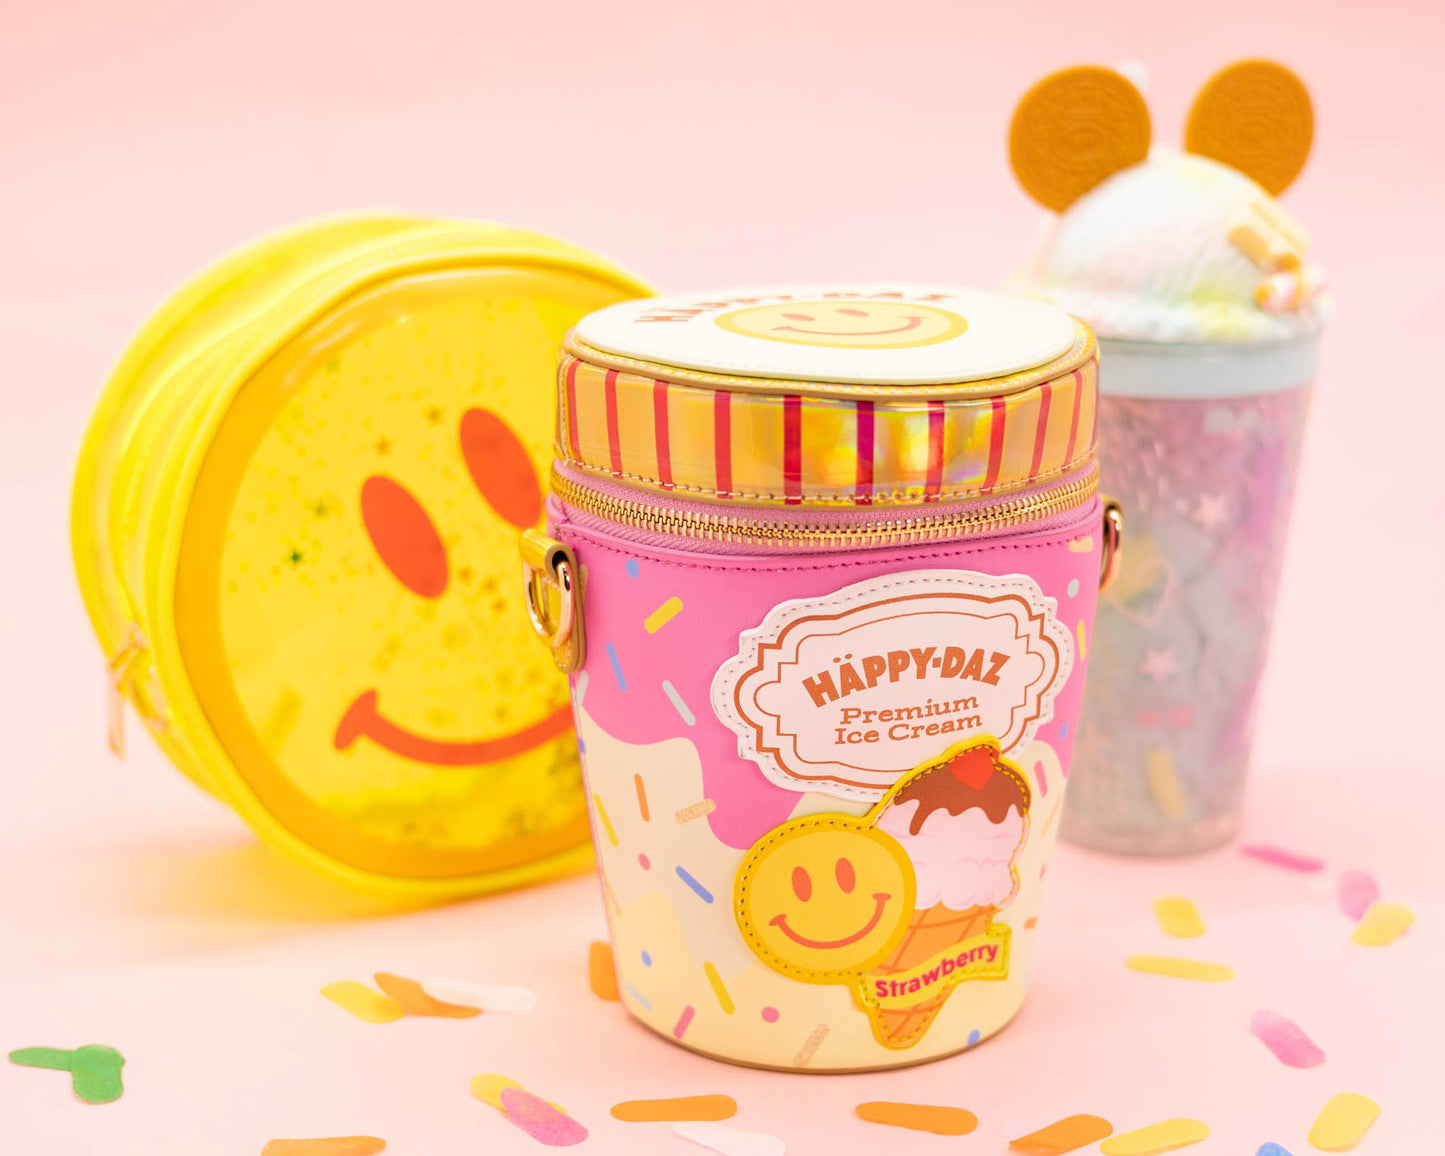 Happy Daz Ice Cream Tub Handbag - Strawberry 🍓